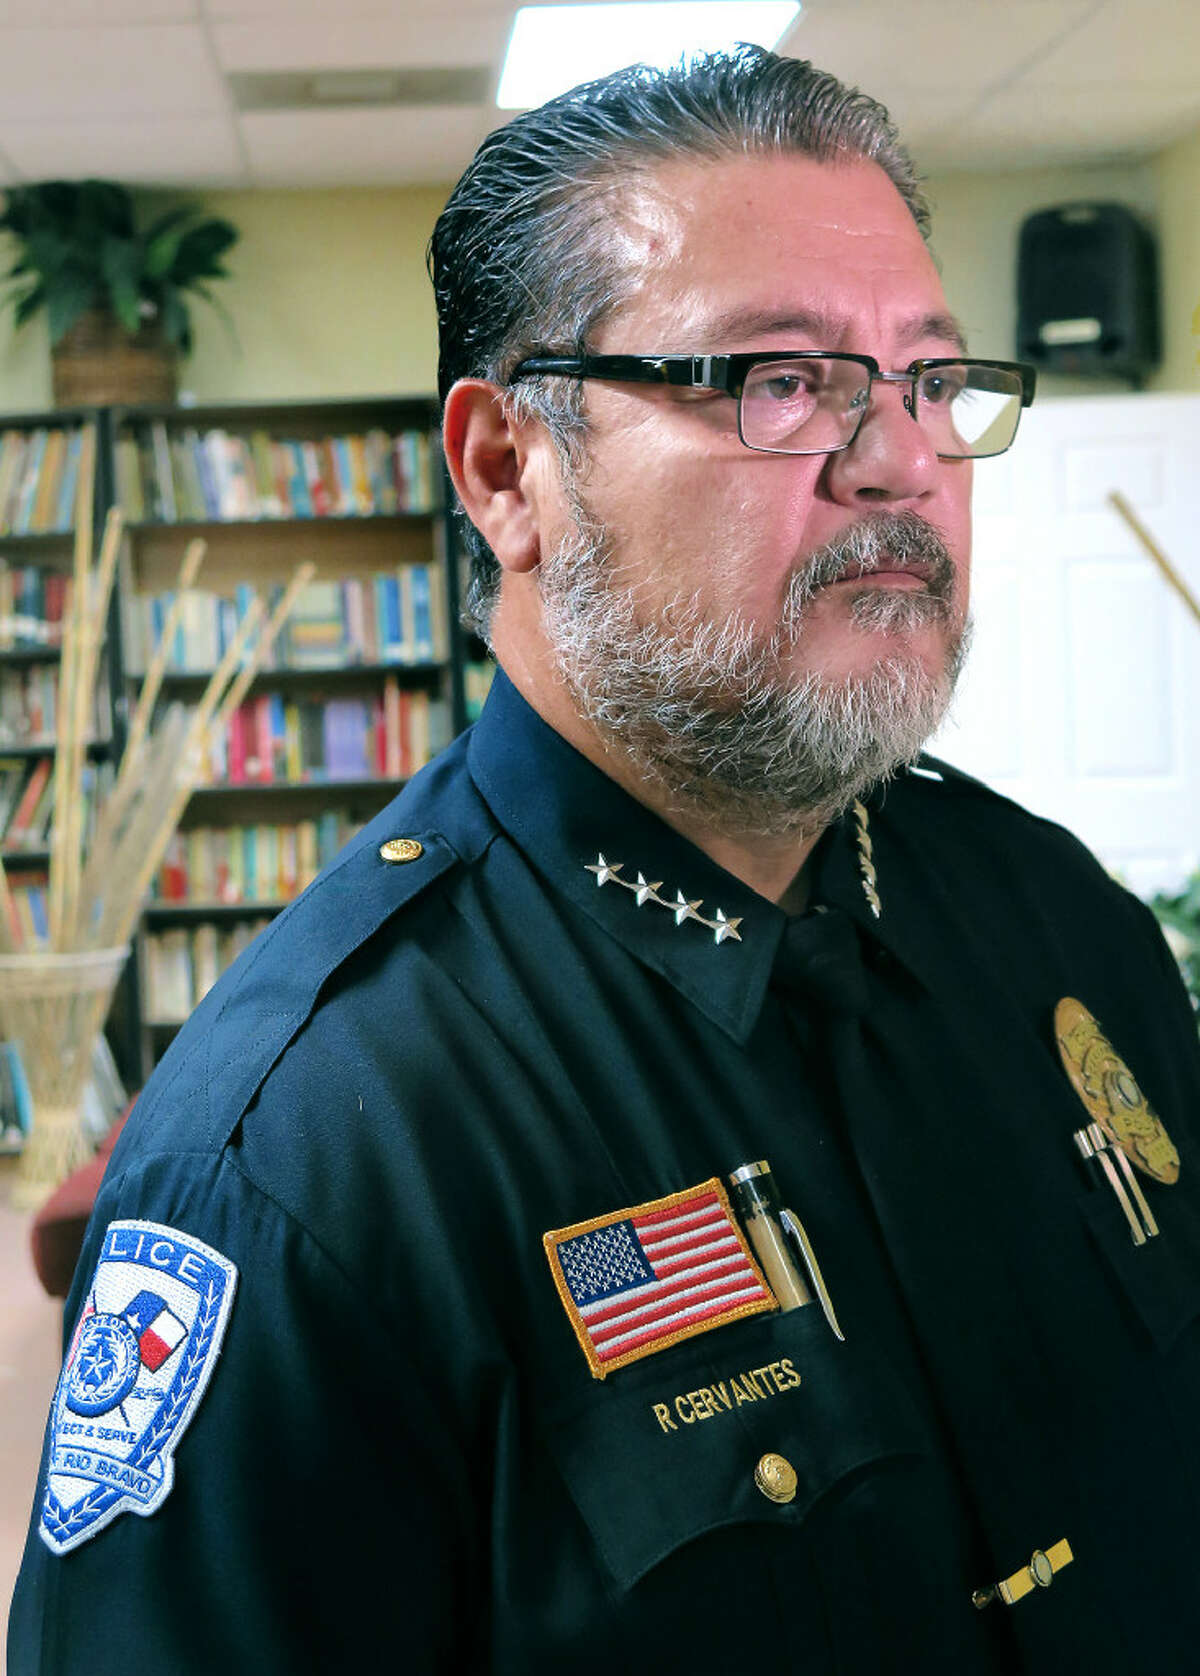 Rio Bravo Police Chief Rene Cervantes is pictured in this file photo.